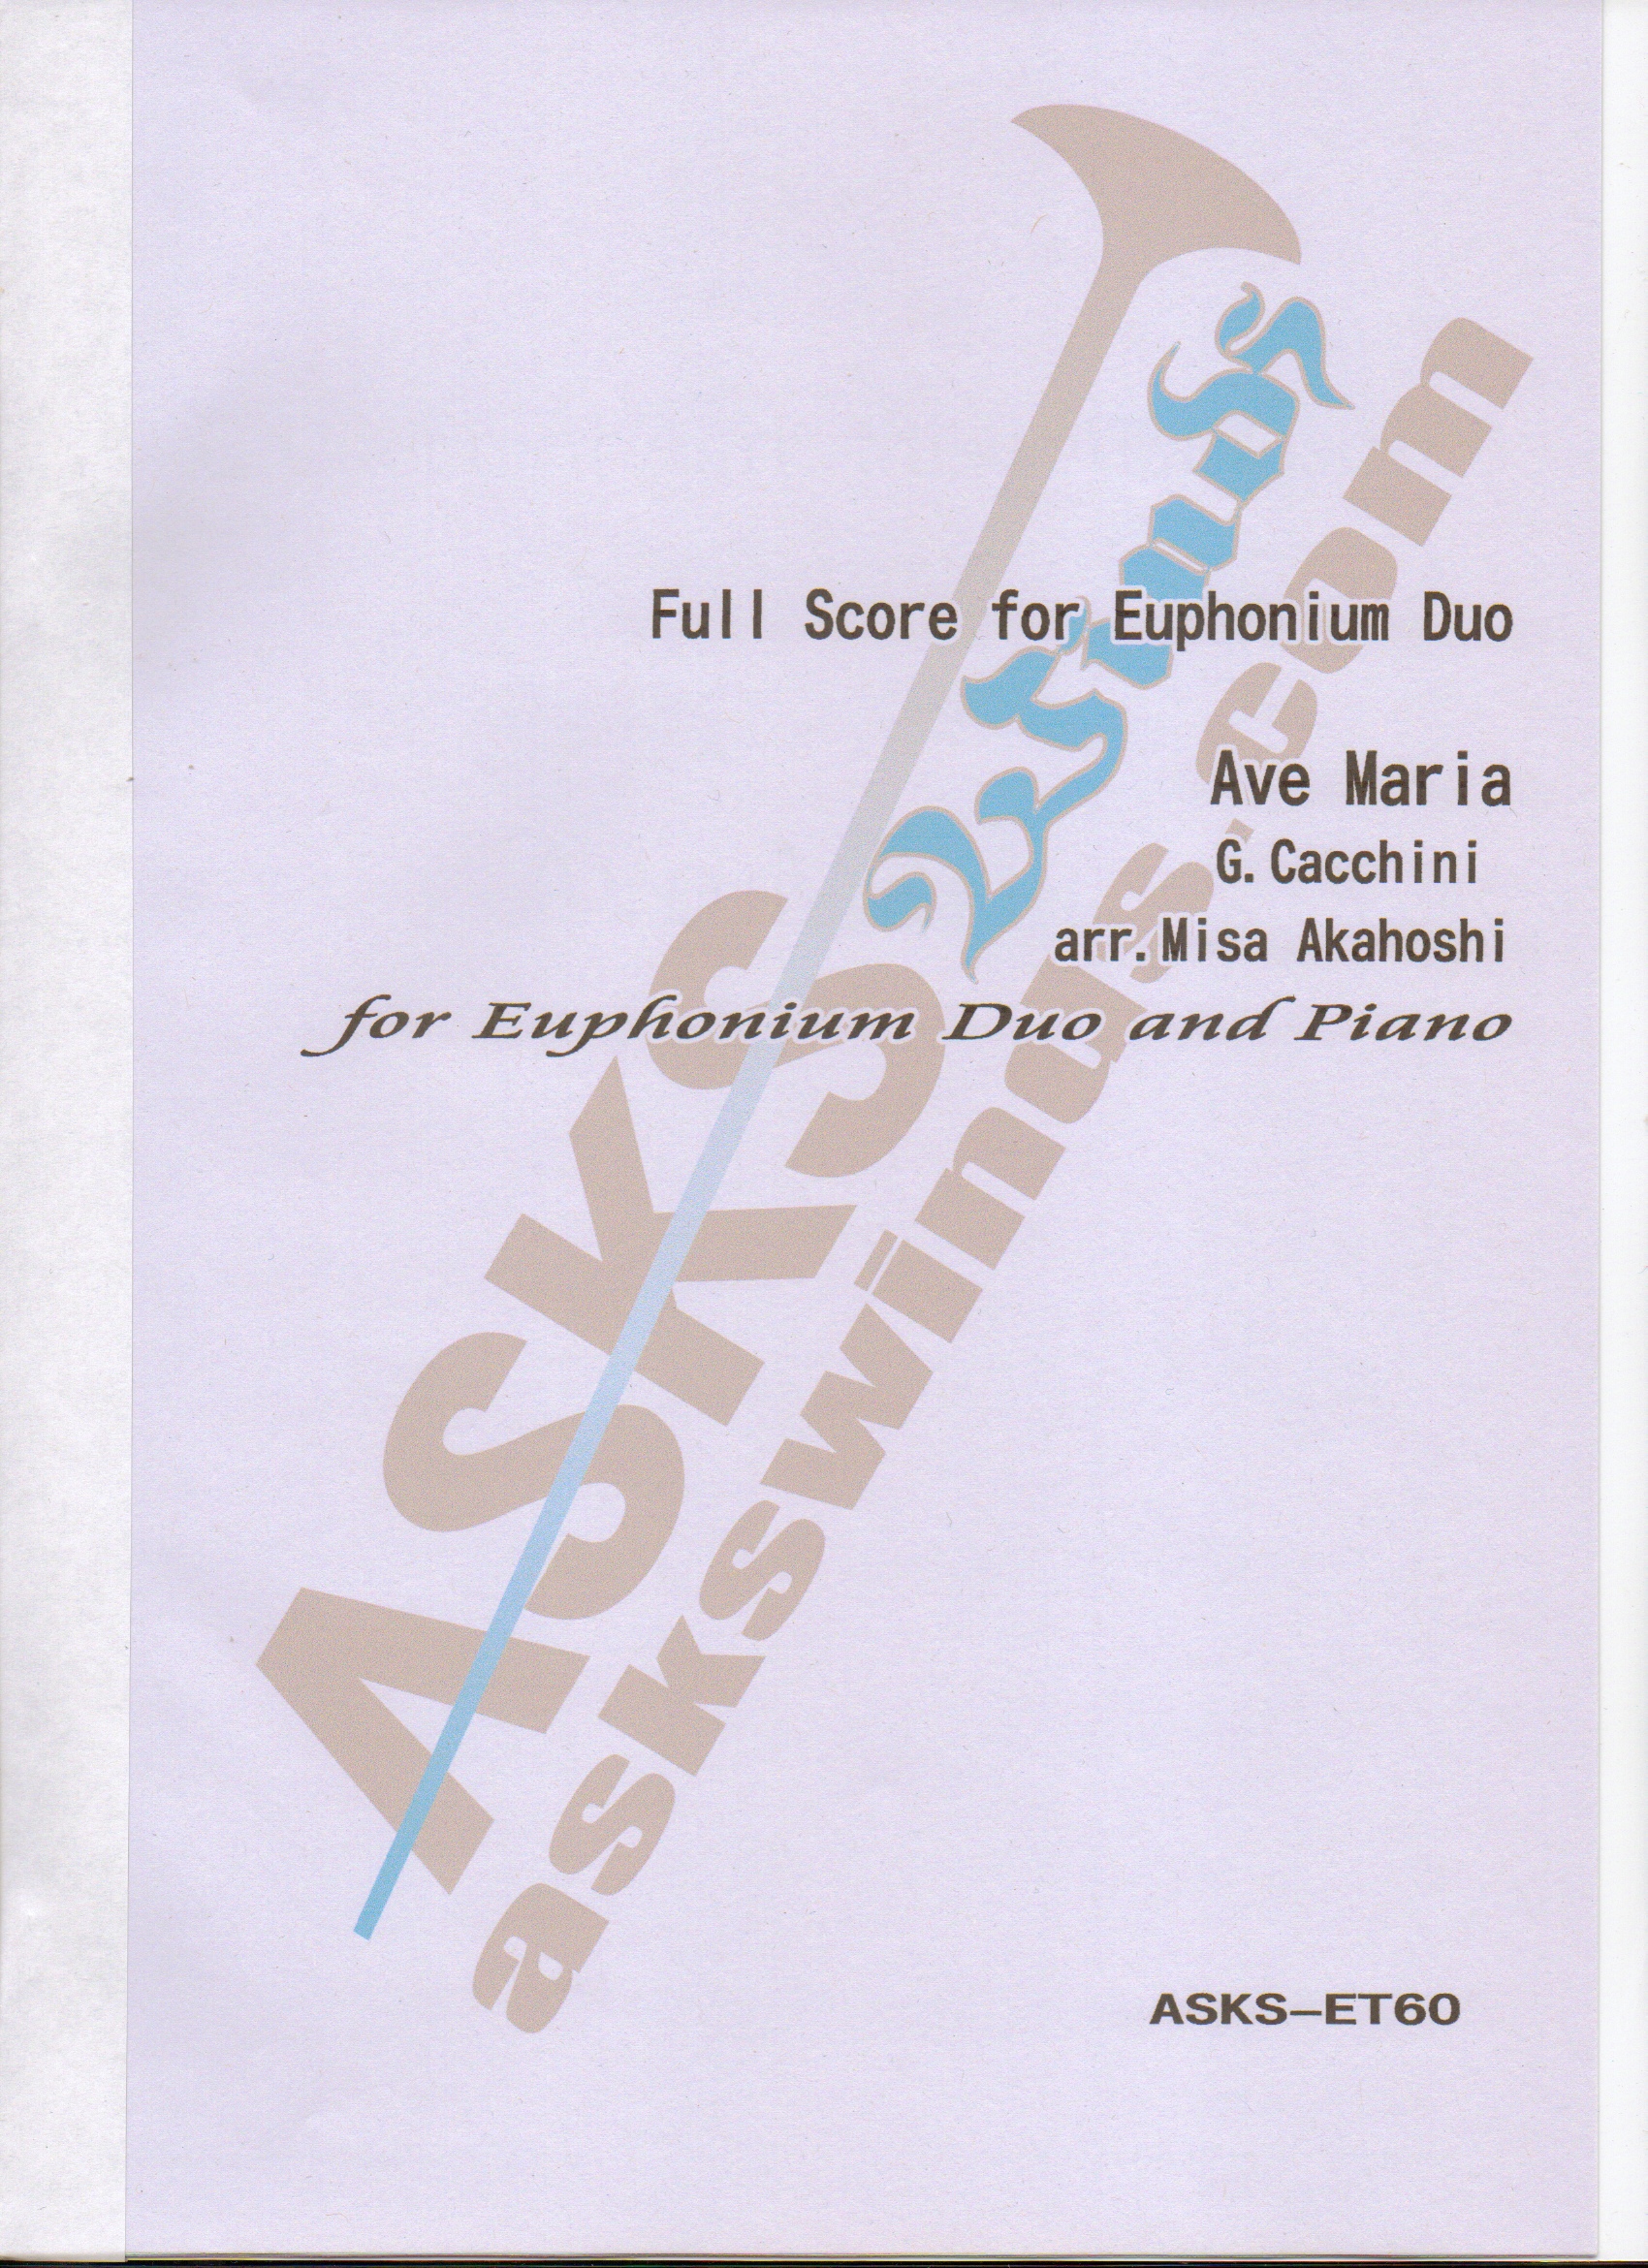 Ave Maria - Giulio Caccini Arr. M.Akahoshi - duet for 2 euphoniums and piano